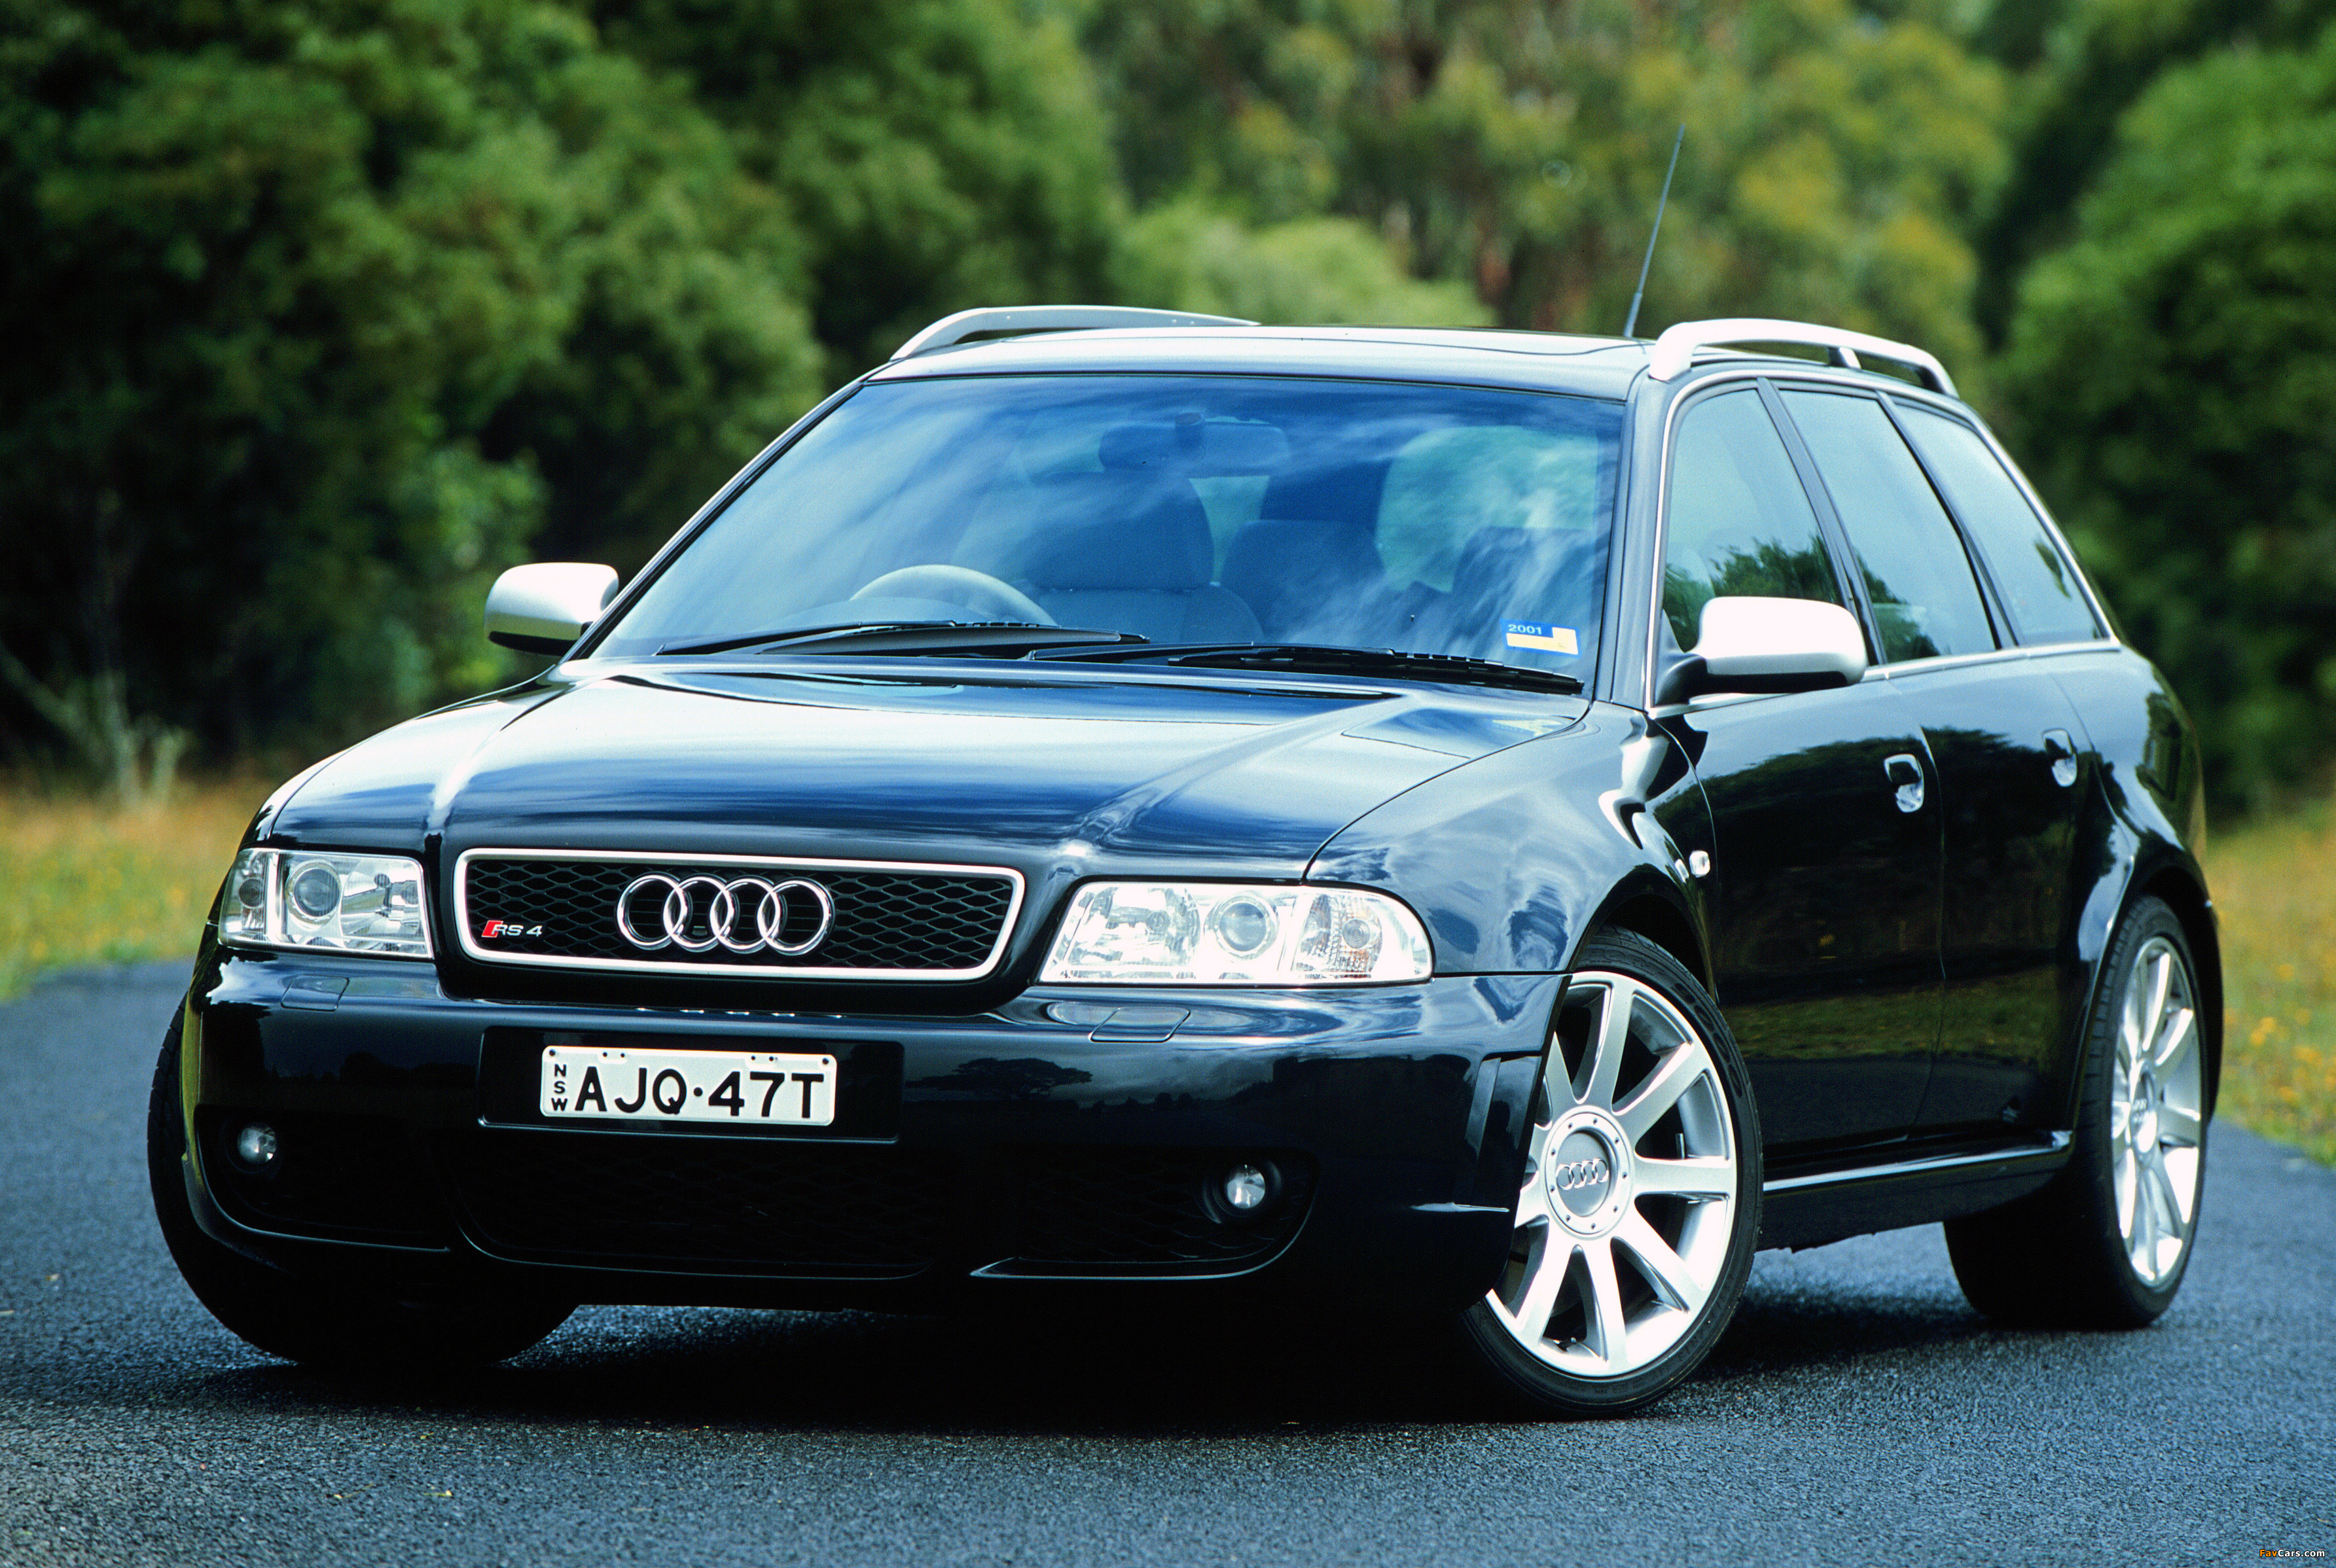 Ауди б5 универсал купить. Audi rs4 2000. Audi a4 b5 2000. Ауди а4 Авант универсал 2000. Audi rs4 2001.